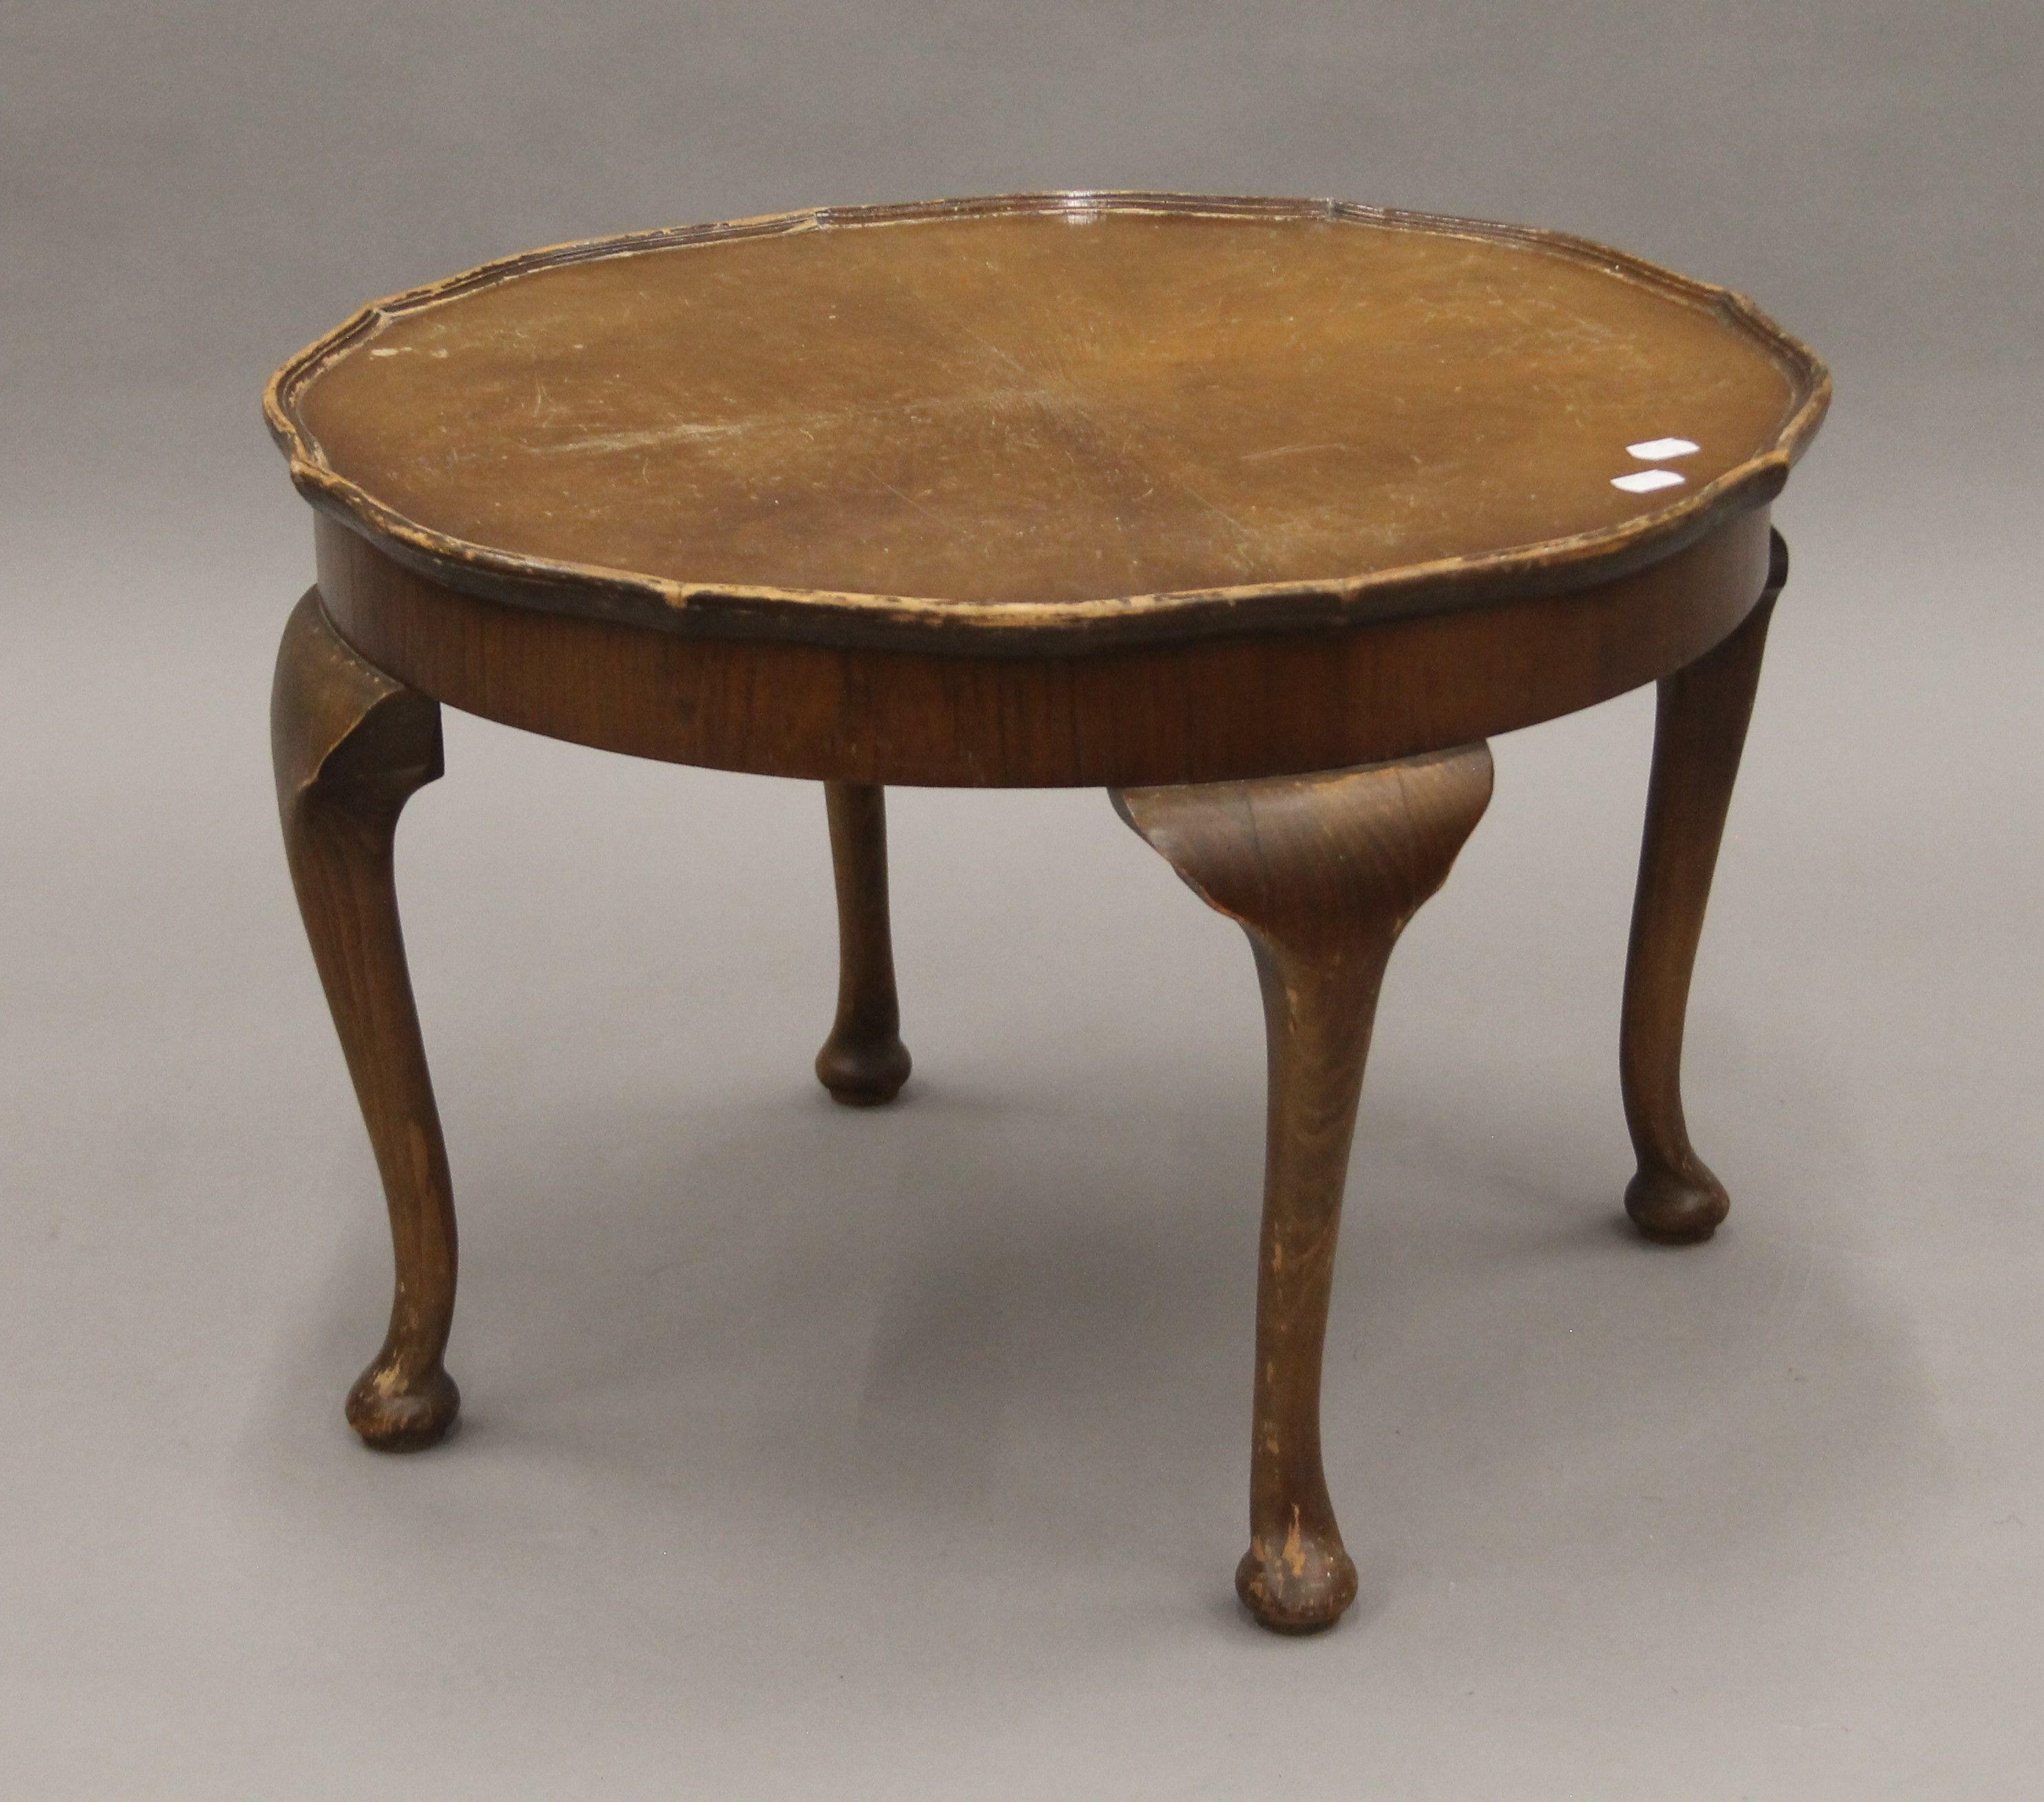 An early 20th century walnut coffee table. 59.5 cm diameter.